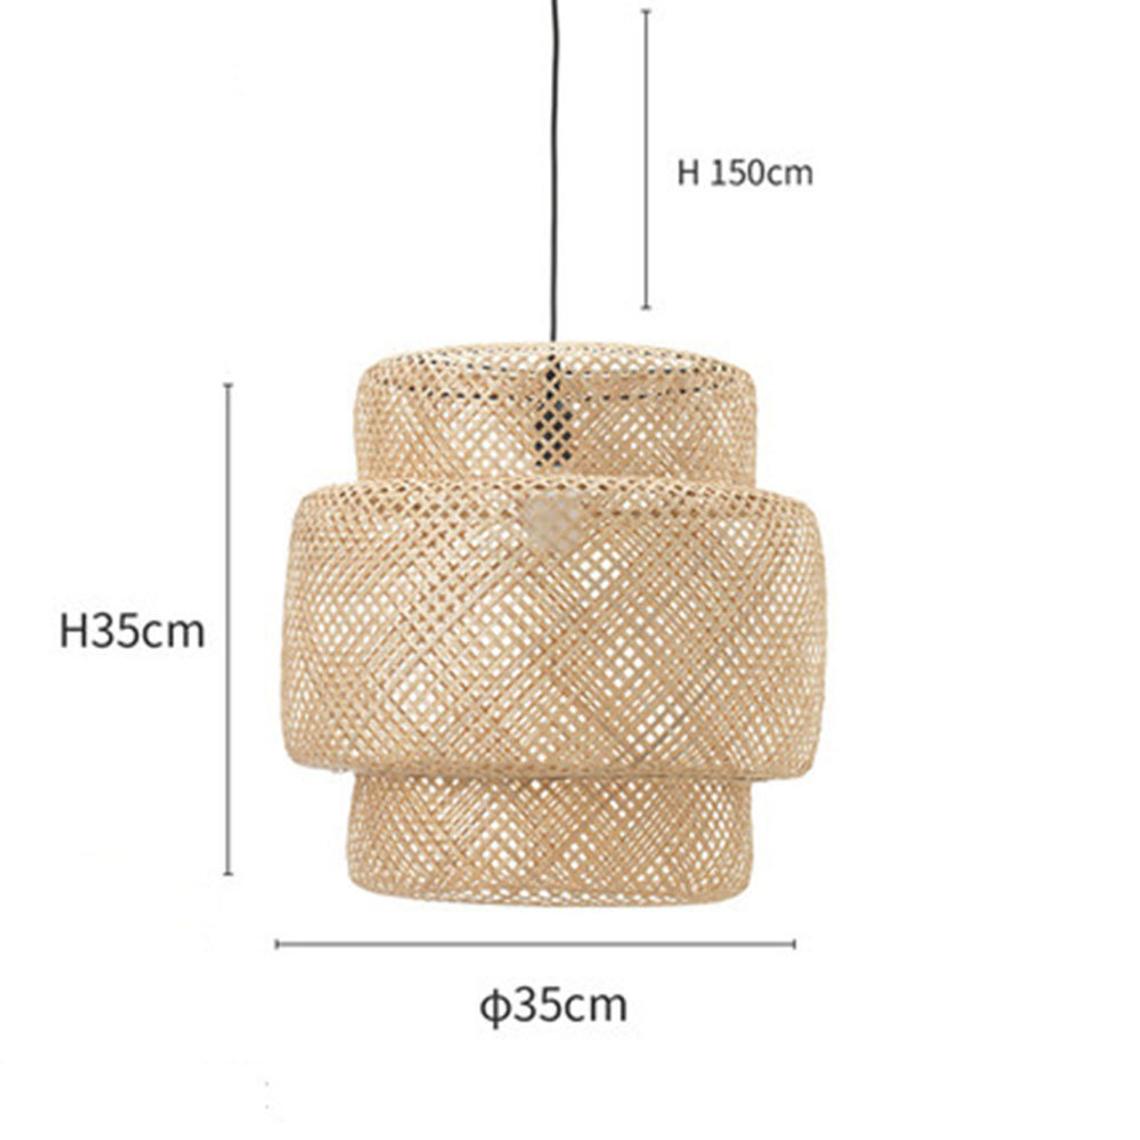 (M)Bamboo Pendant Lighting Drum Handmade Lampshade Fixture for Living Room